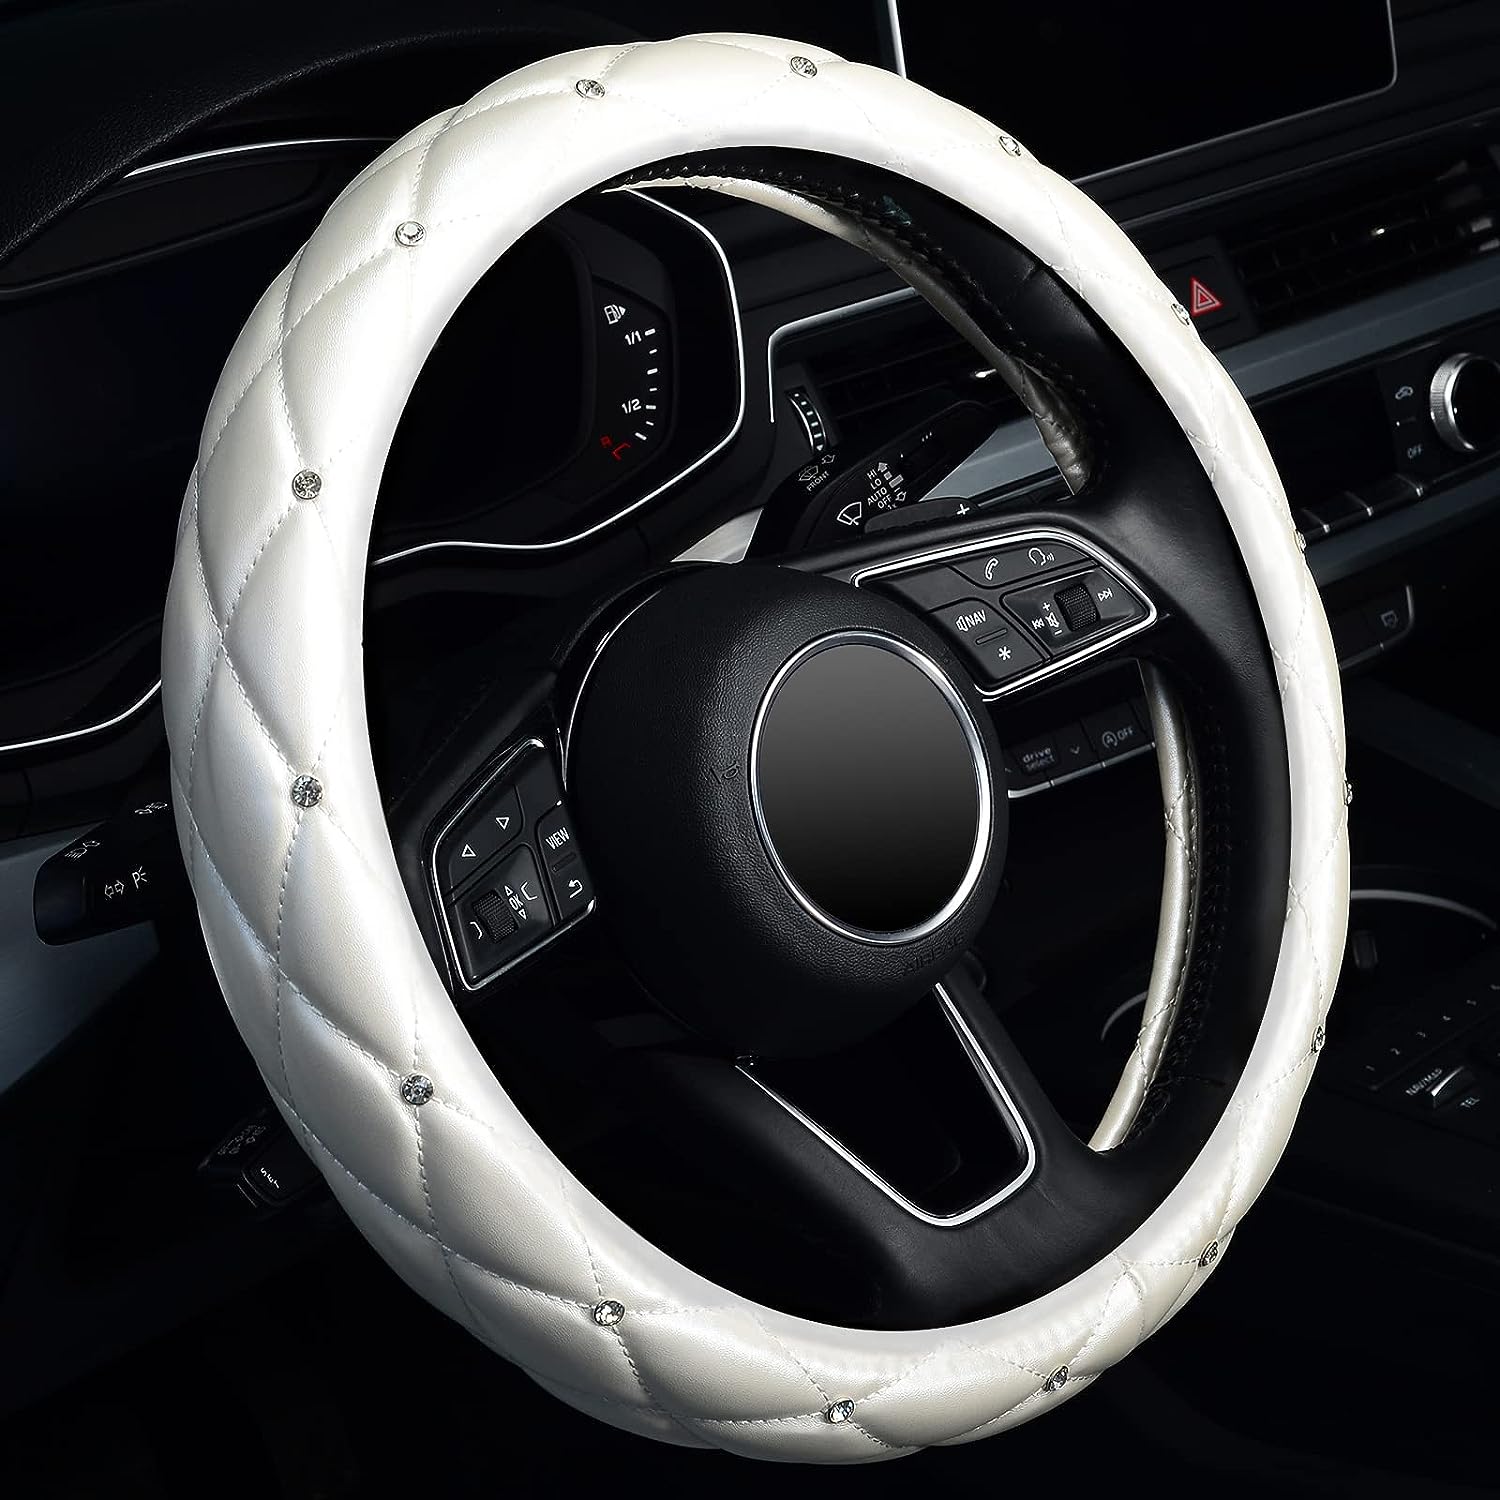 KAFEEK Diamond Soft Leather Steering Wheel Cover with Bling Bling Crystal Rhinestones, Universal 15 inch,Cream White